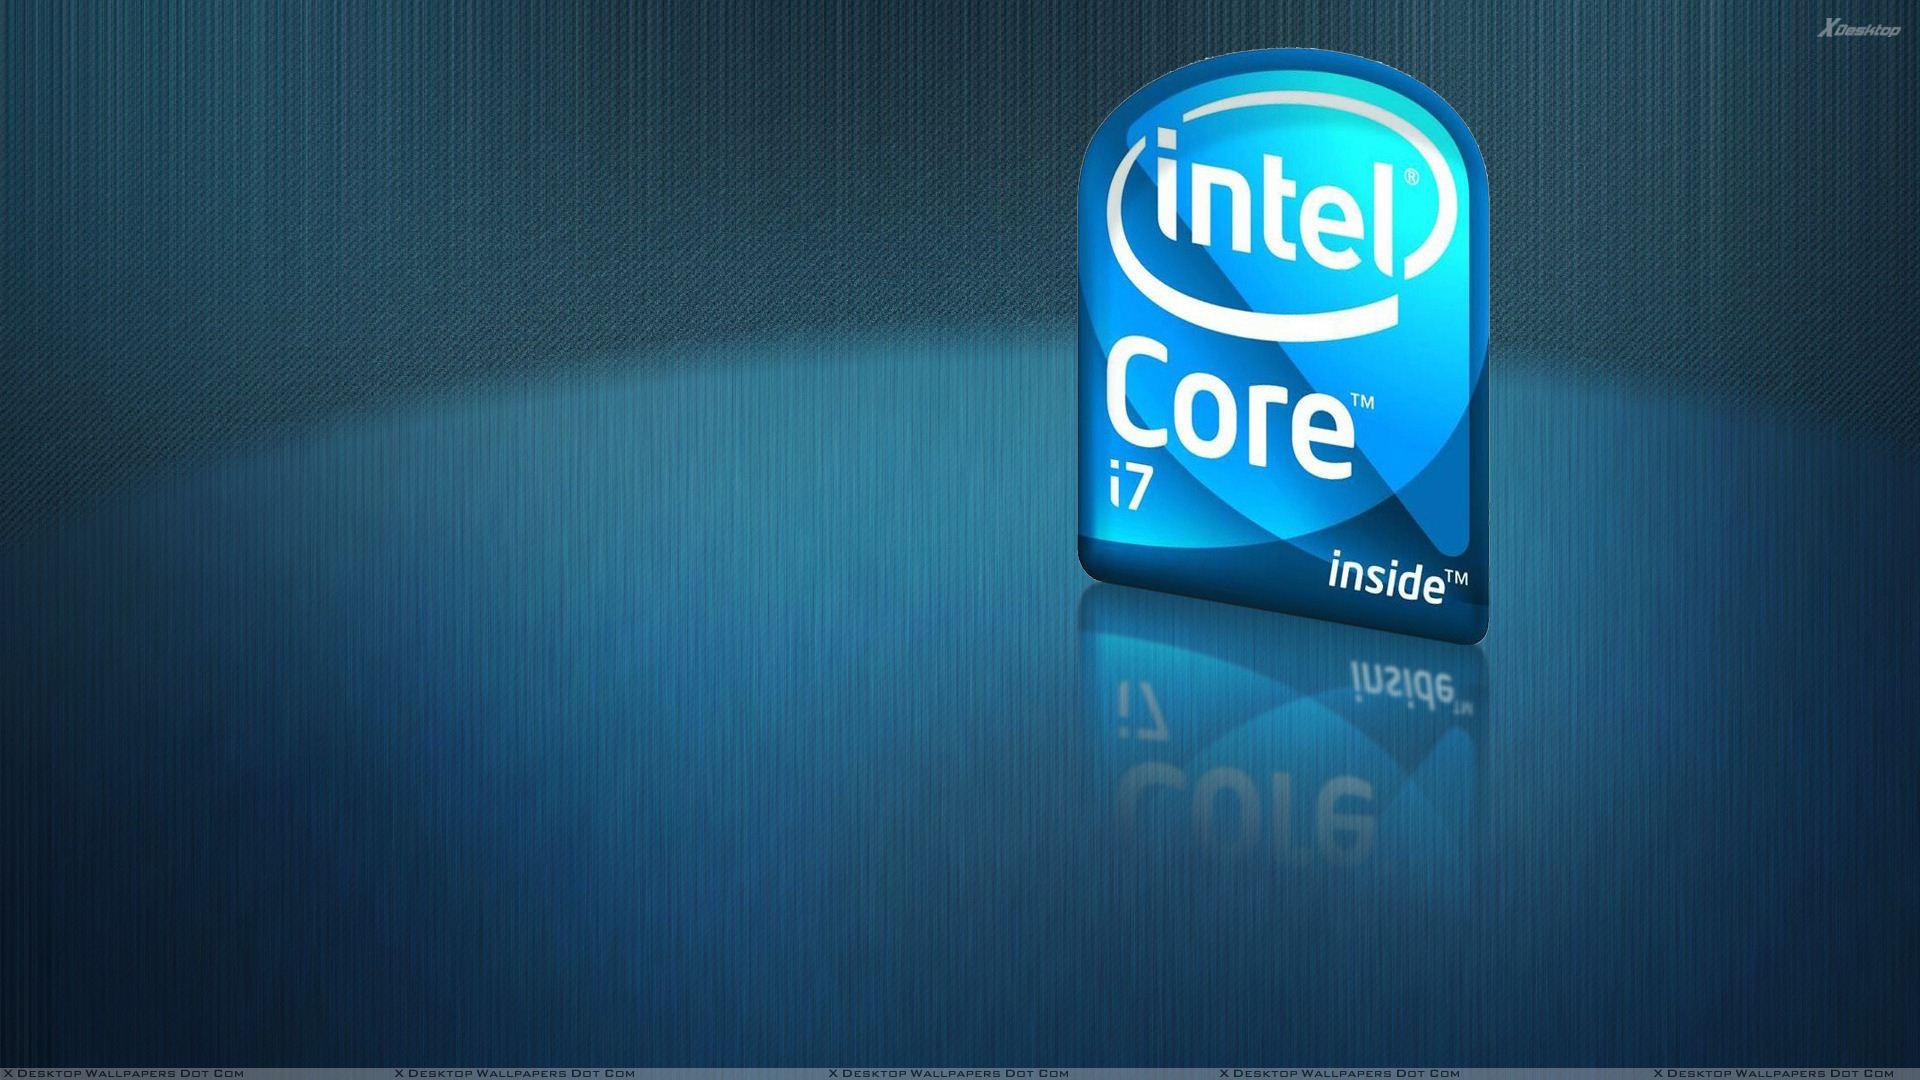 Intel Core Logo - Intel Core i7 Processor On Blue Background Wallpaper